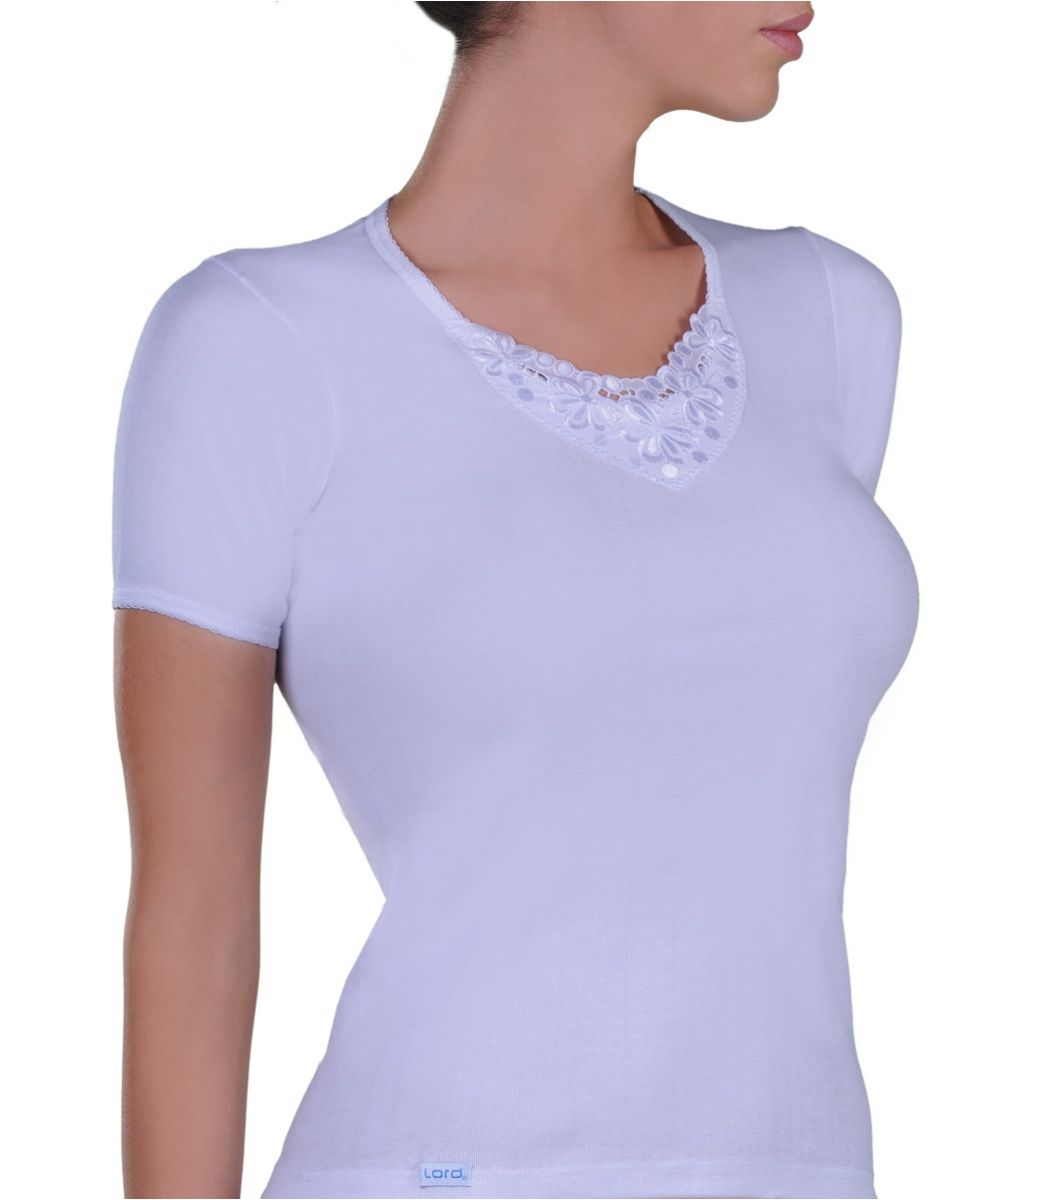 T-Shirt, open neck, motif, white